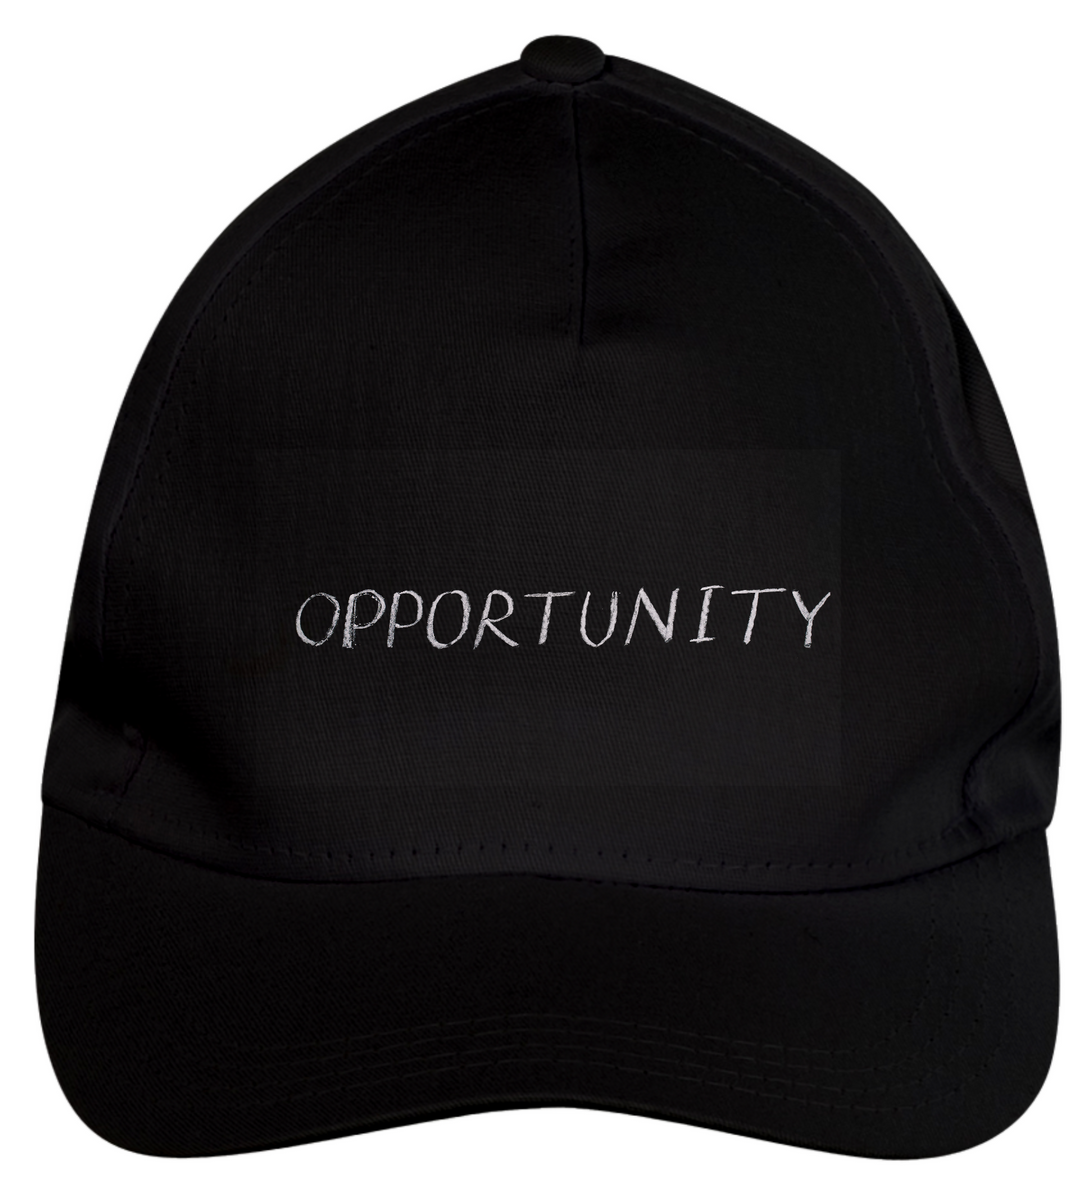 Nome do produto: opportunity